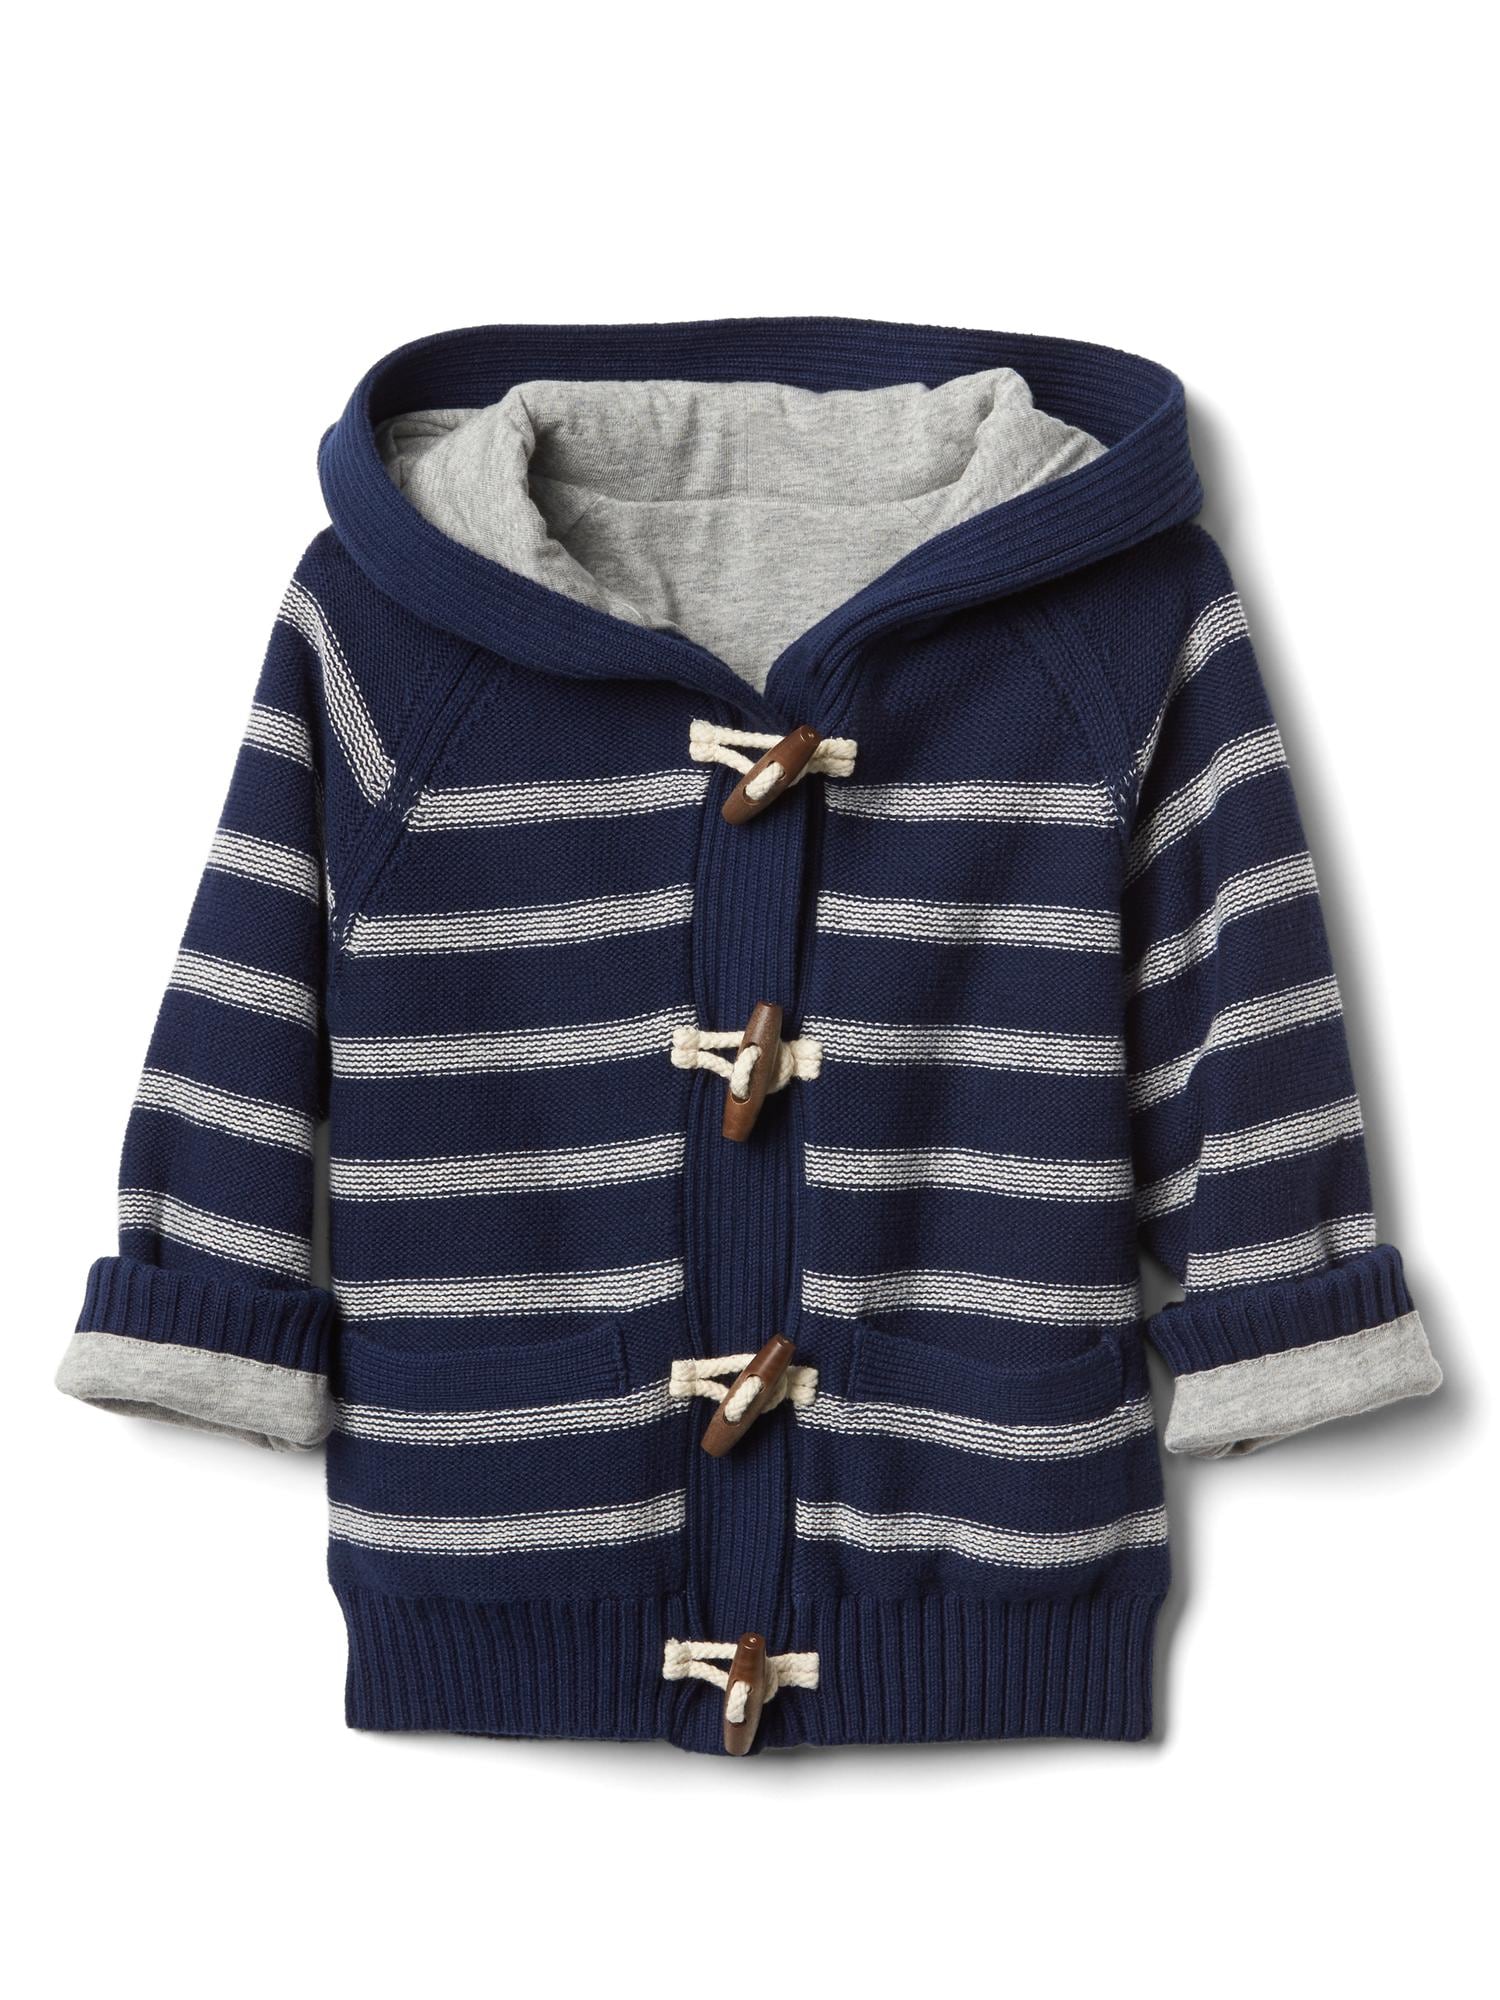 Stripe lined toggled sweater | Gap